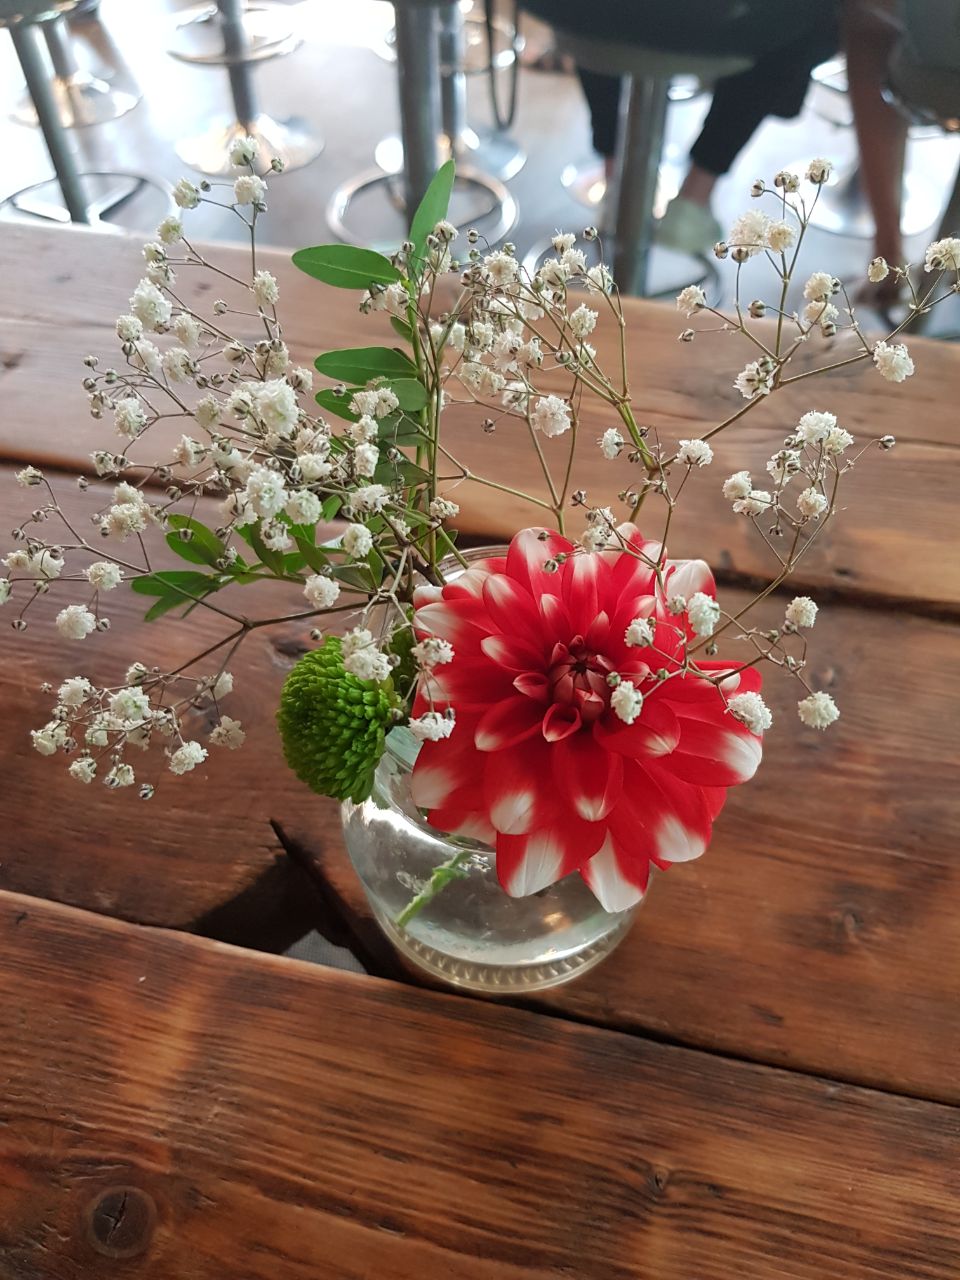 Chrysanthemum Small Wonder